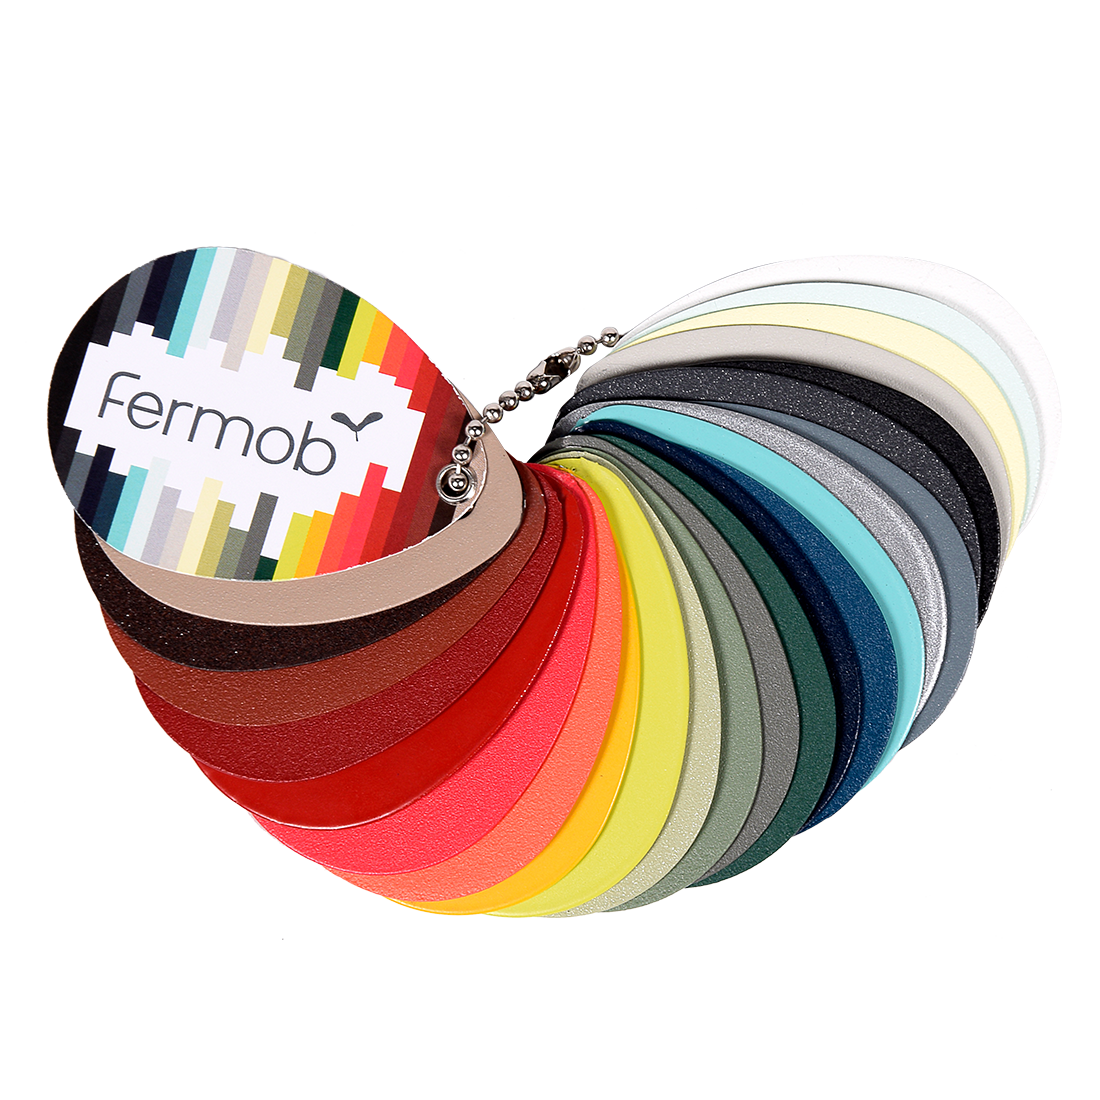 Fermob: The Colour Expert